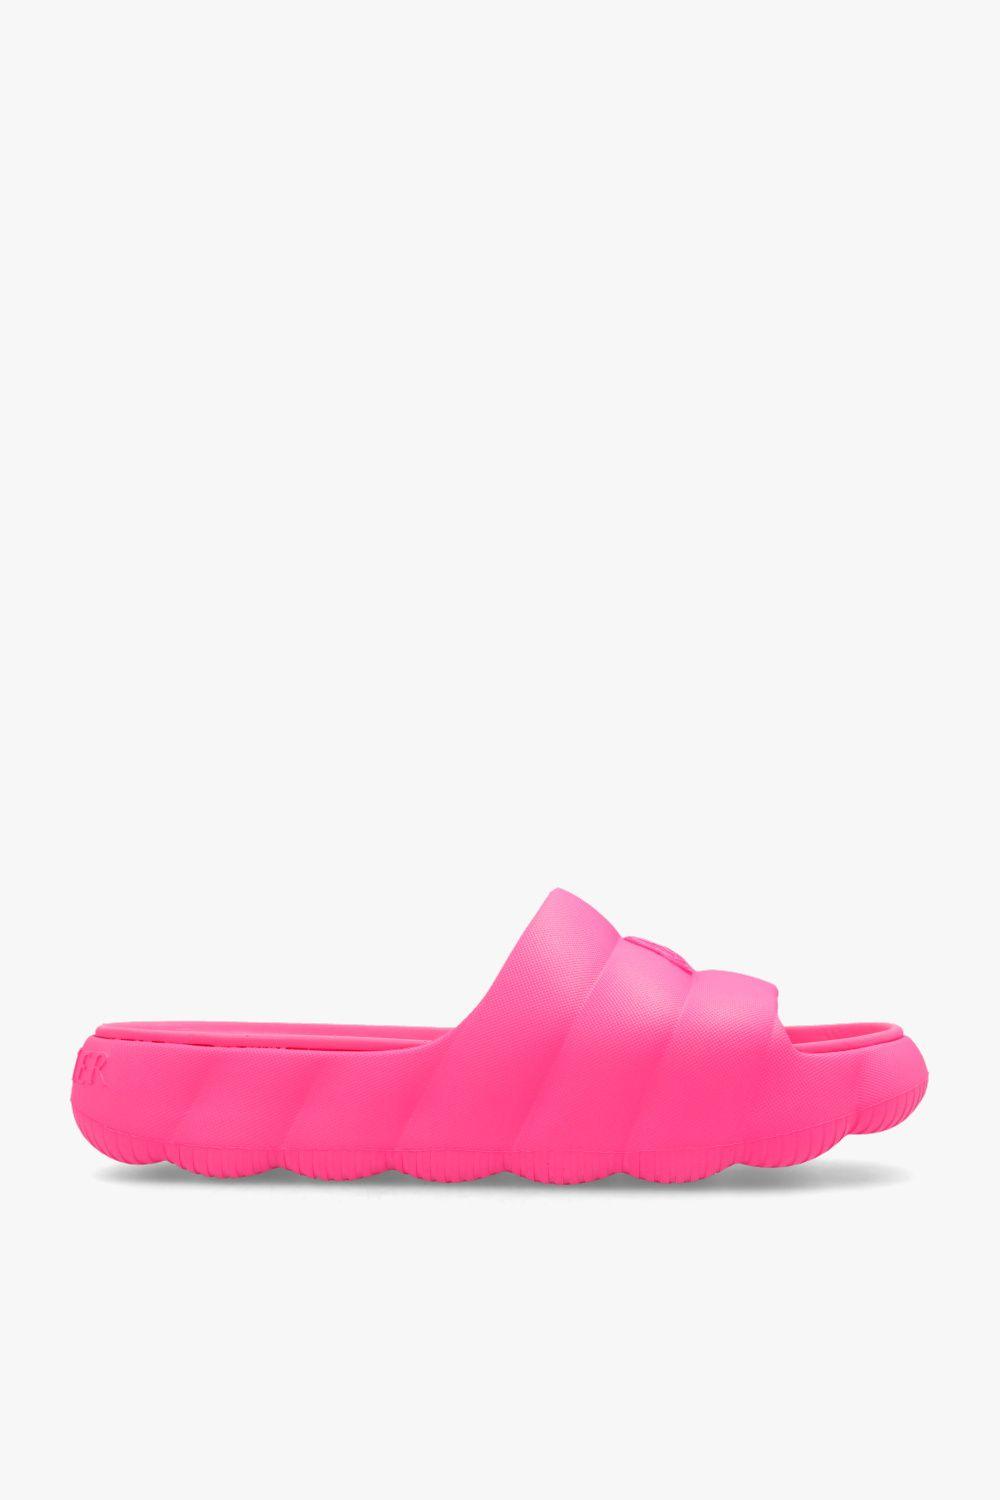 Moncler 'lilo' Slides in Pink | Lyst